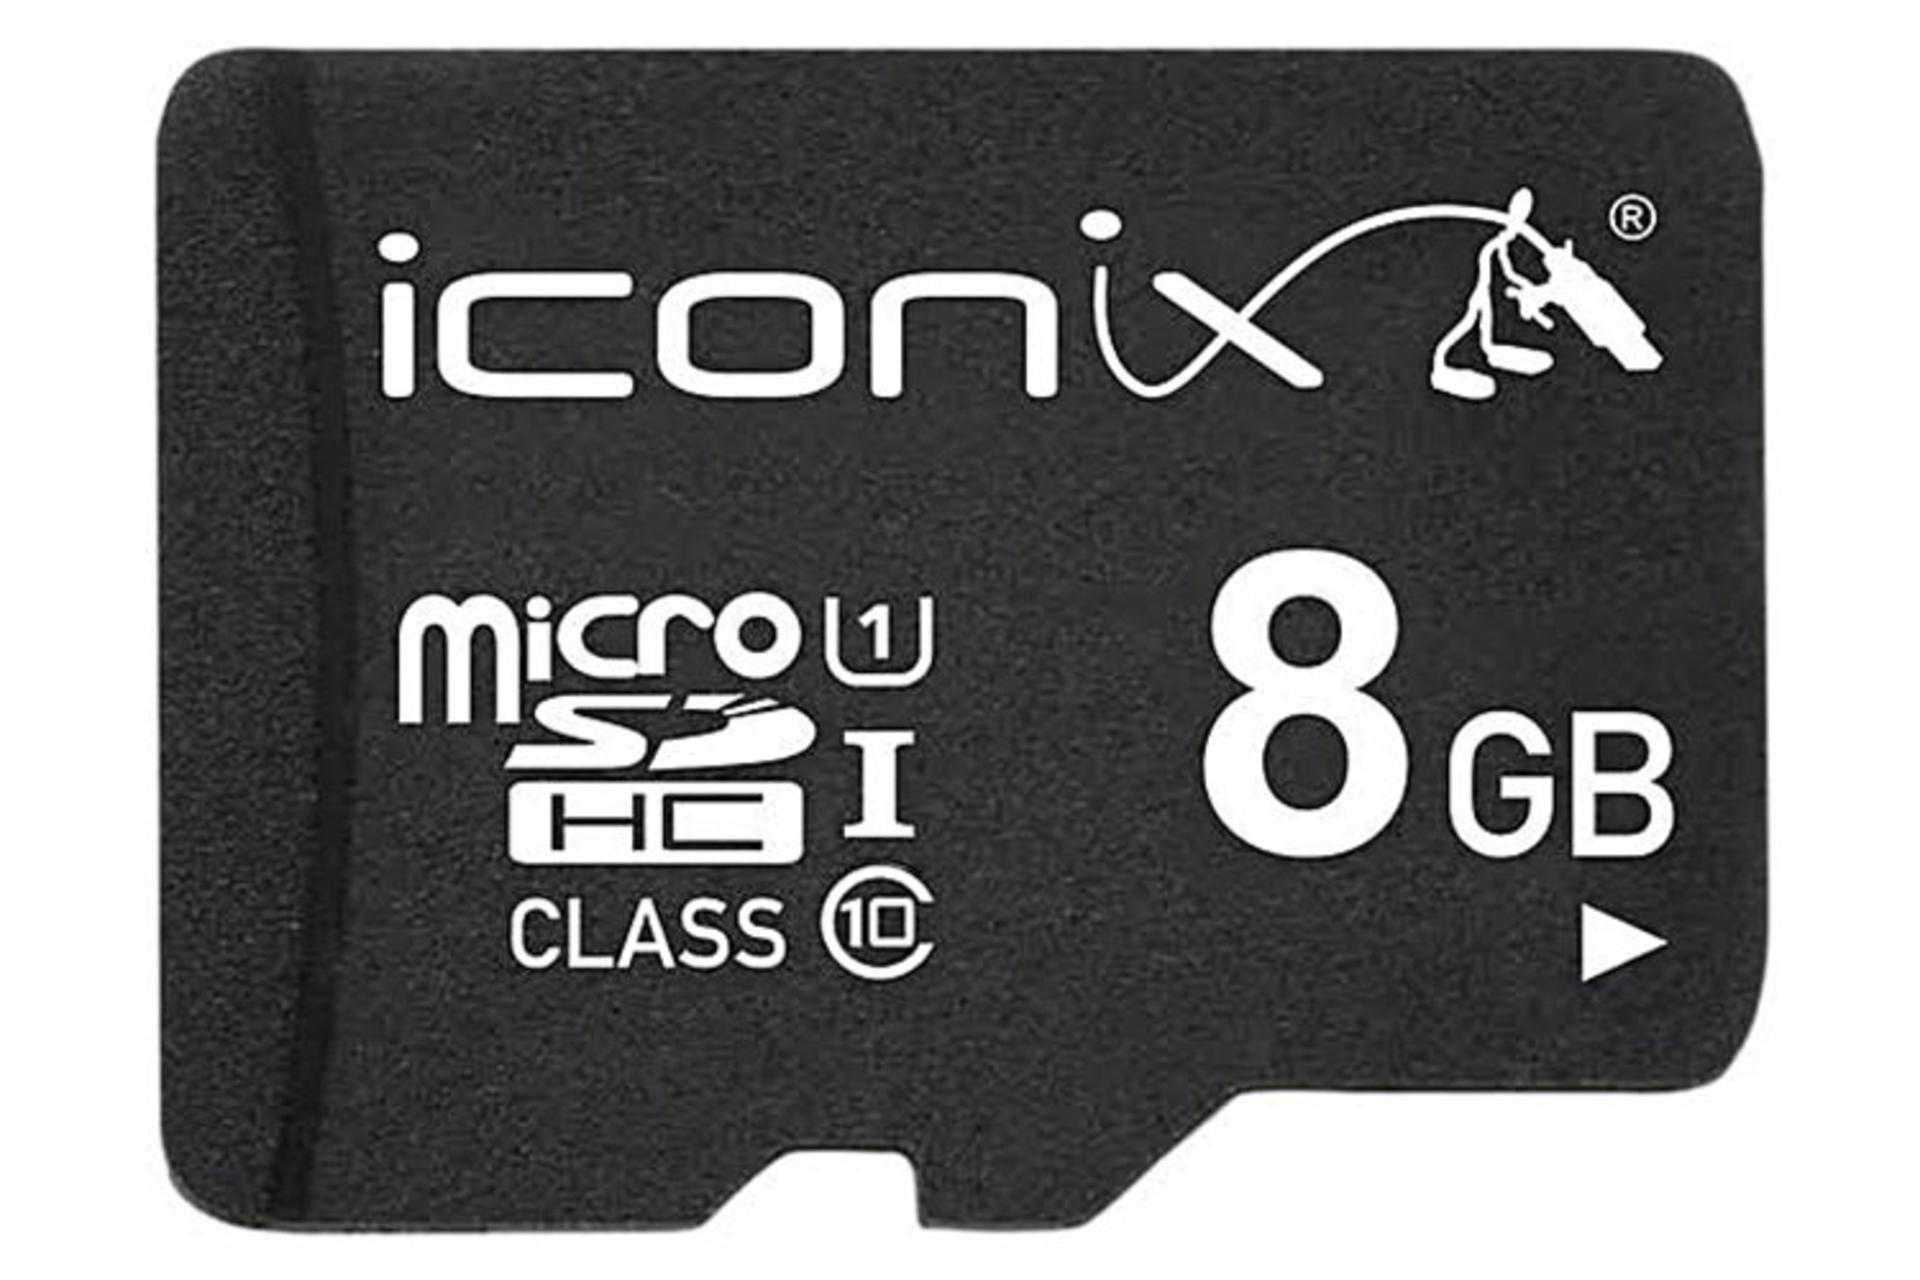 iconix Super Speed microSDXC Class 10 UHS-I U3 8GB